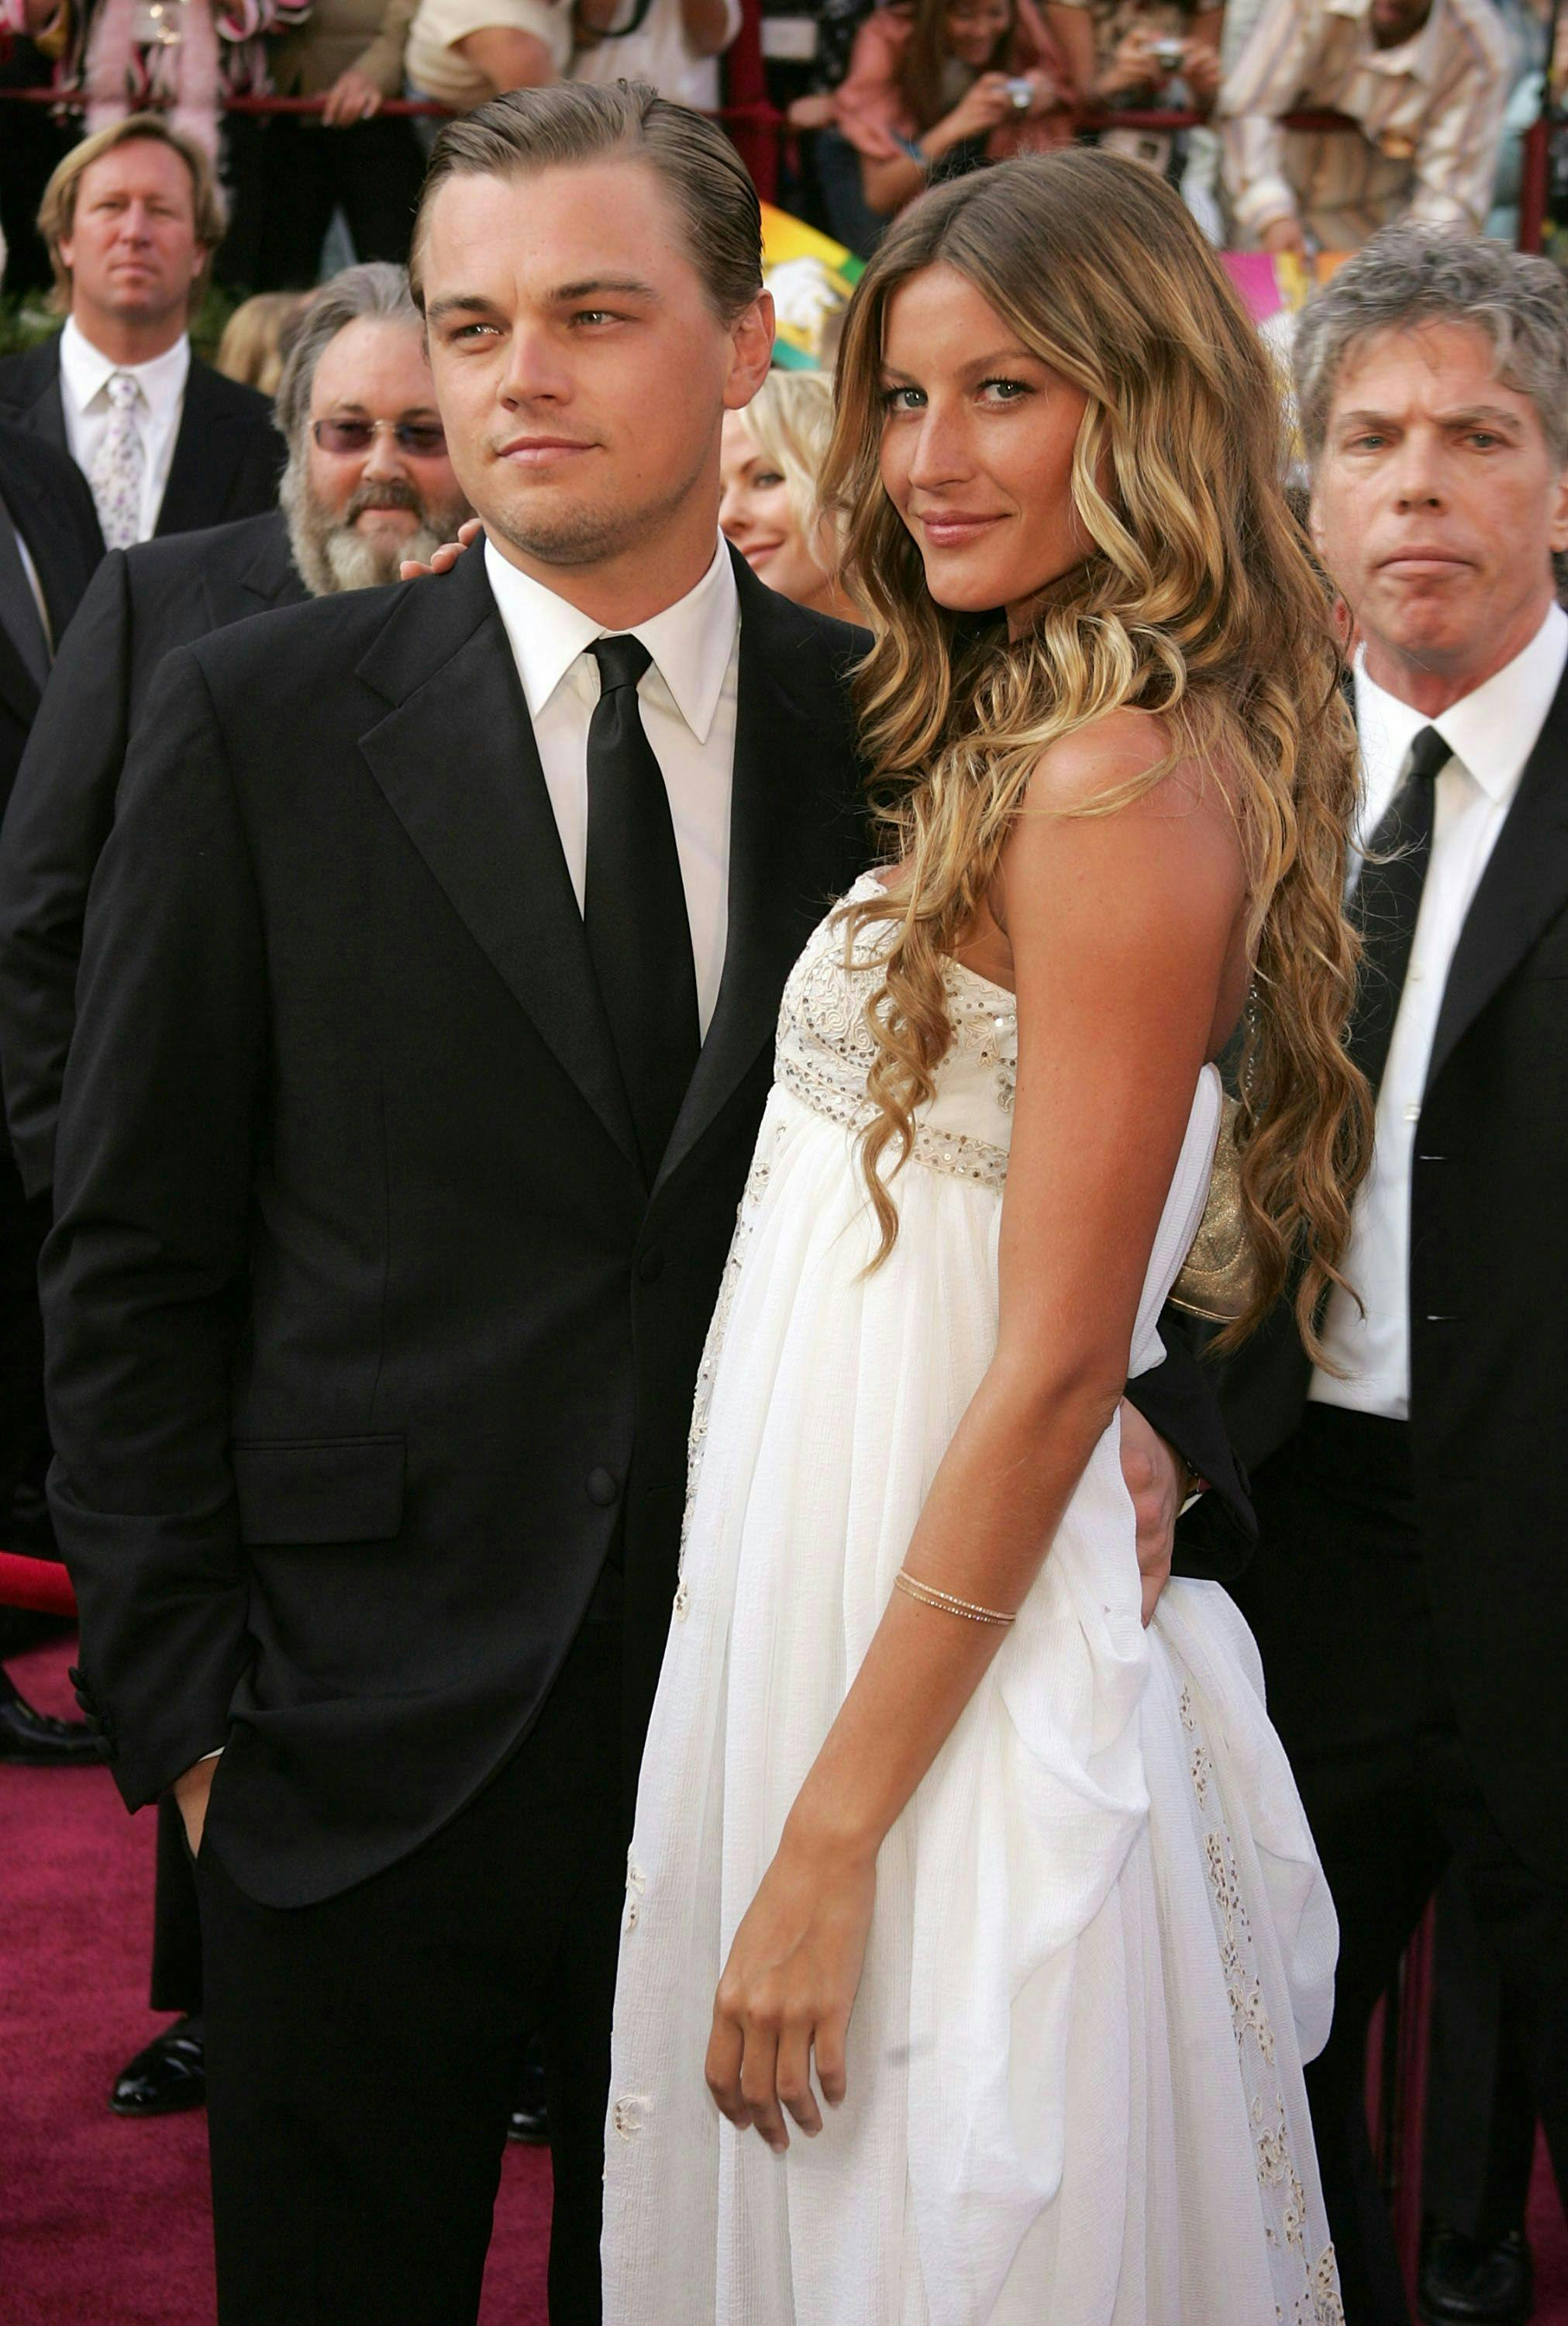 Gisele Bündchen and Leonardo DiCaprio pose together on a red carpet.